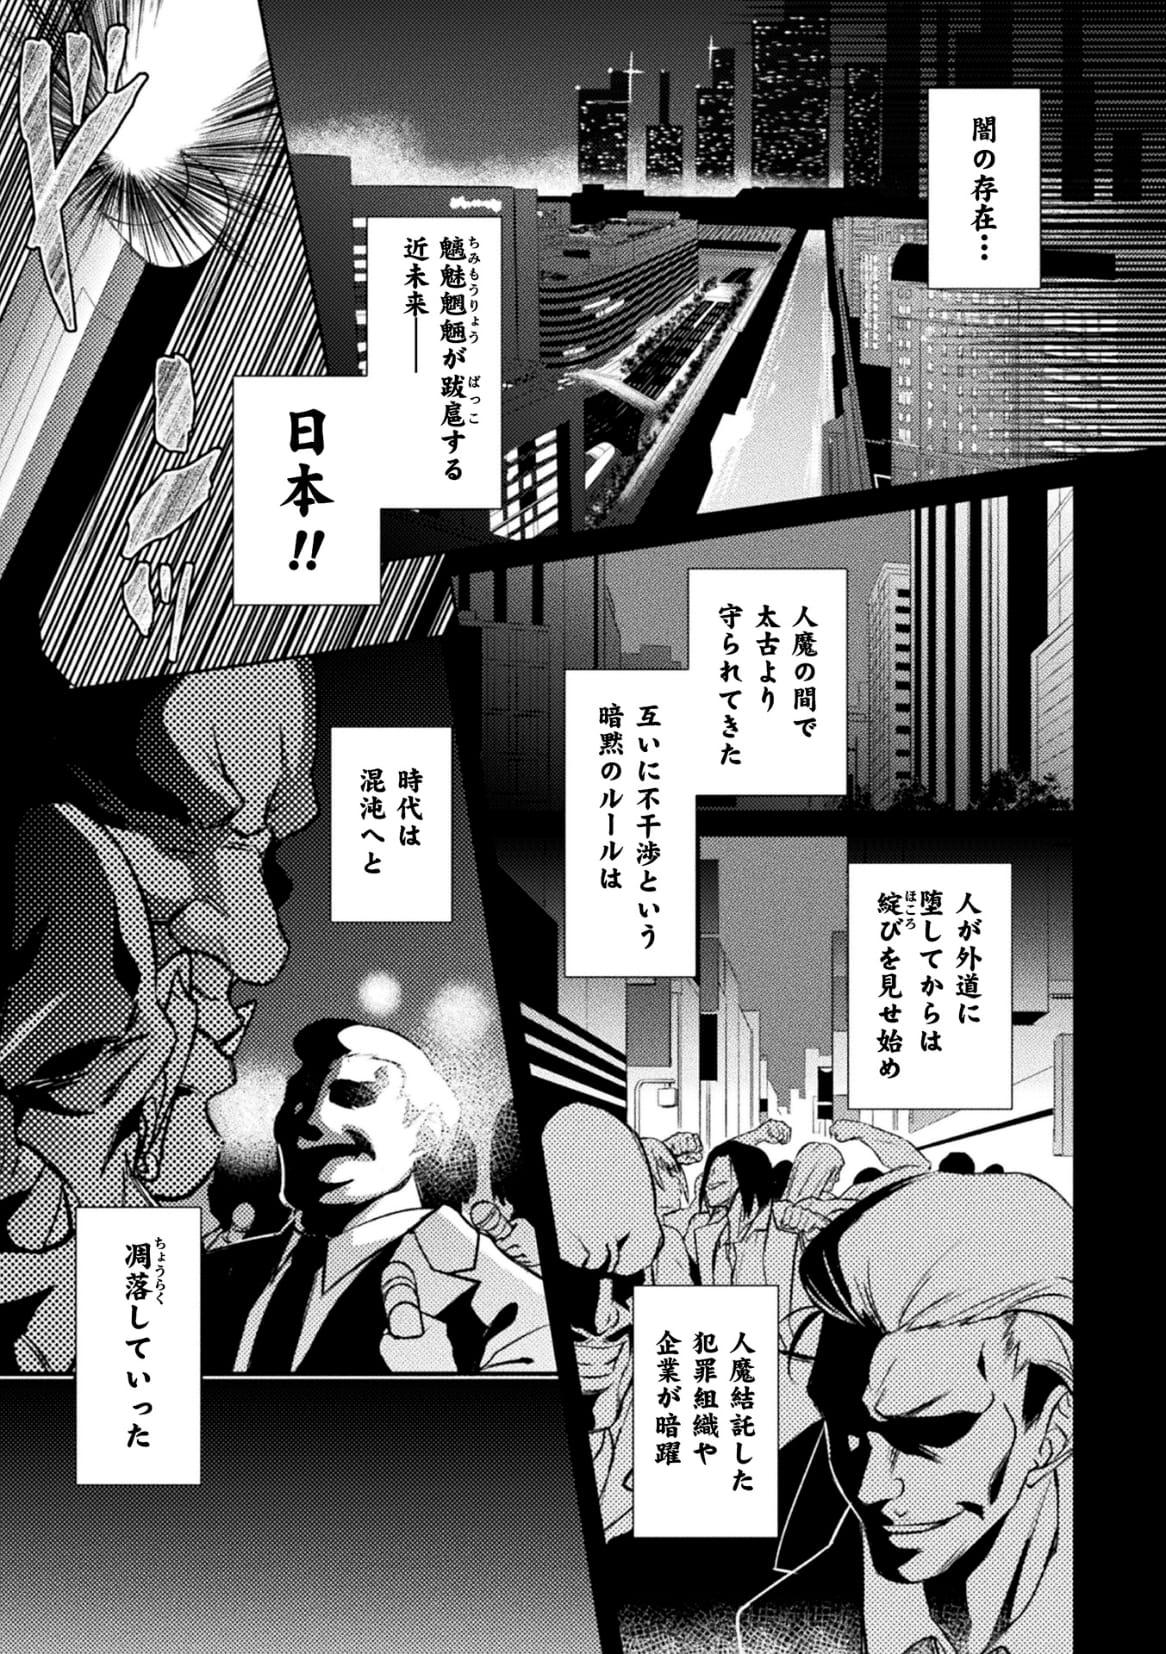 Taimanin Asagi ZERO THE COMIC vol 1 2